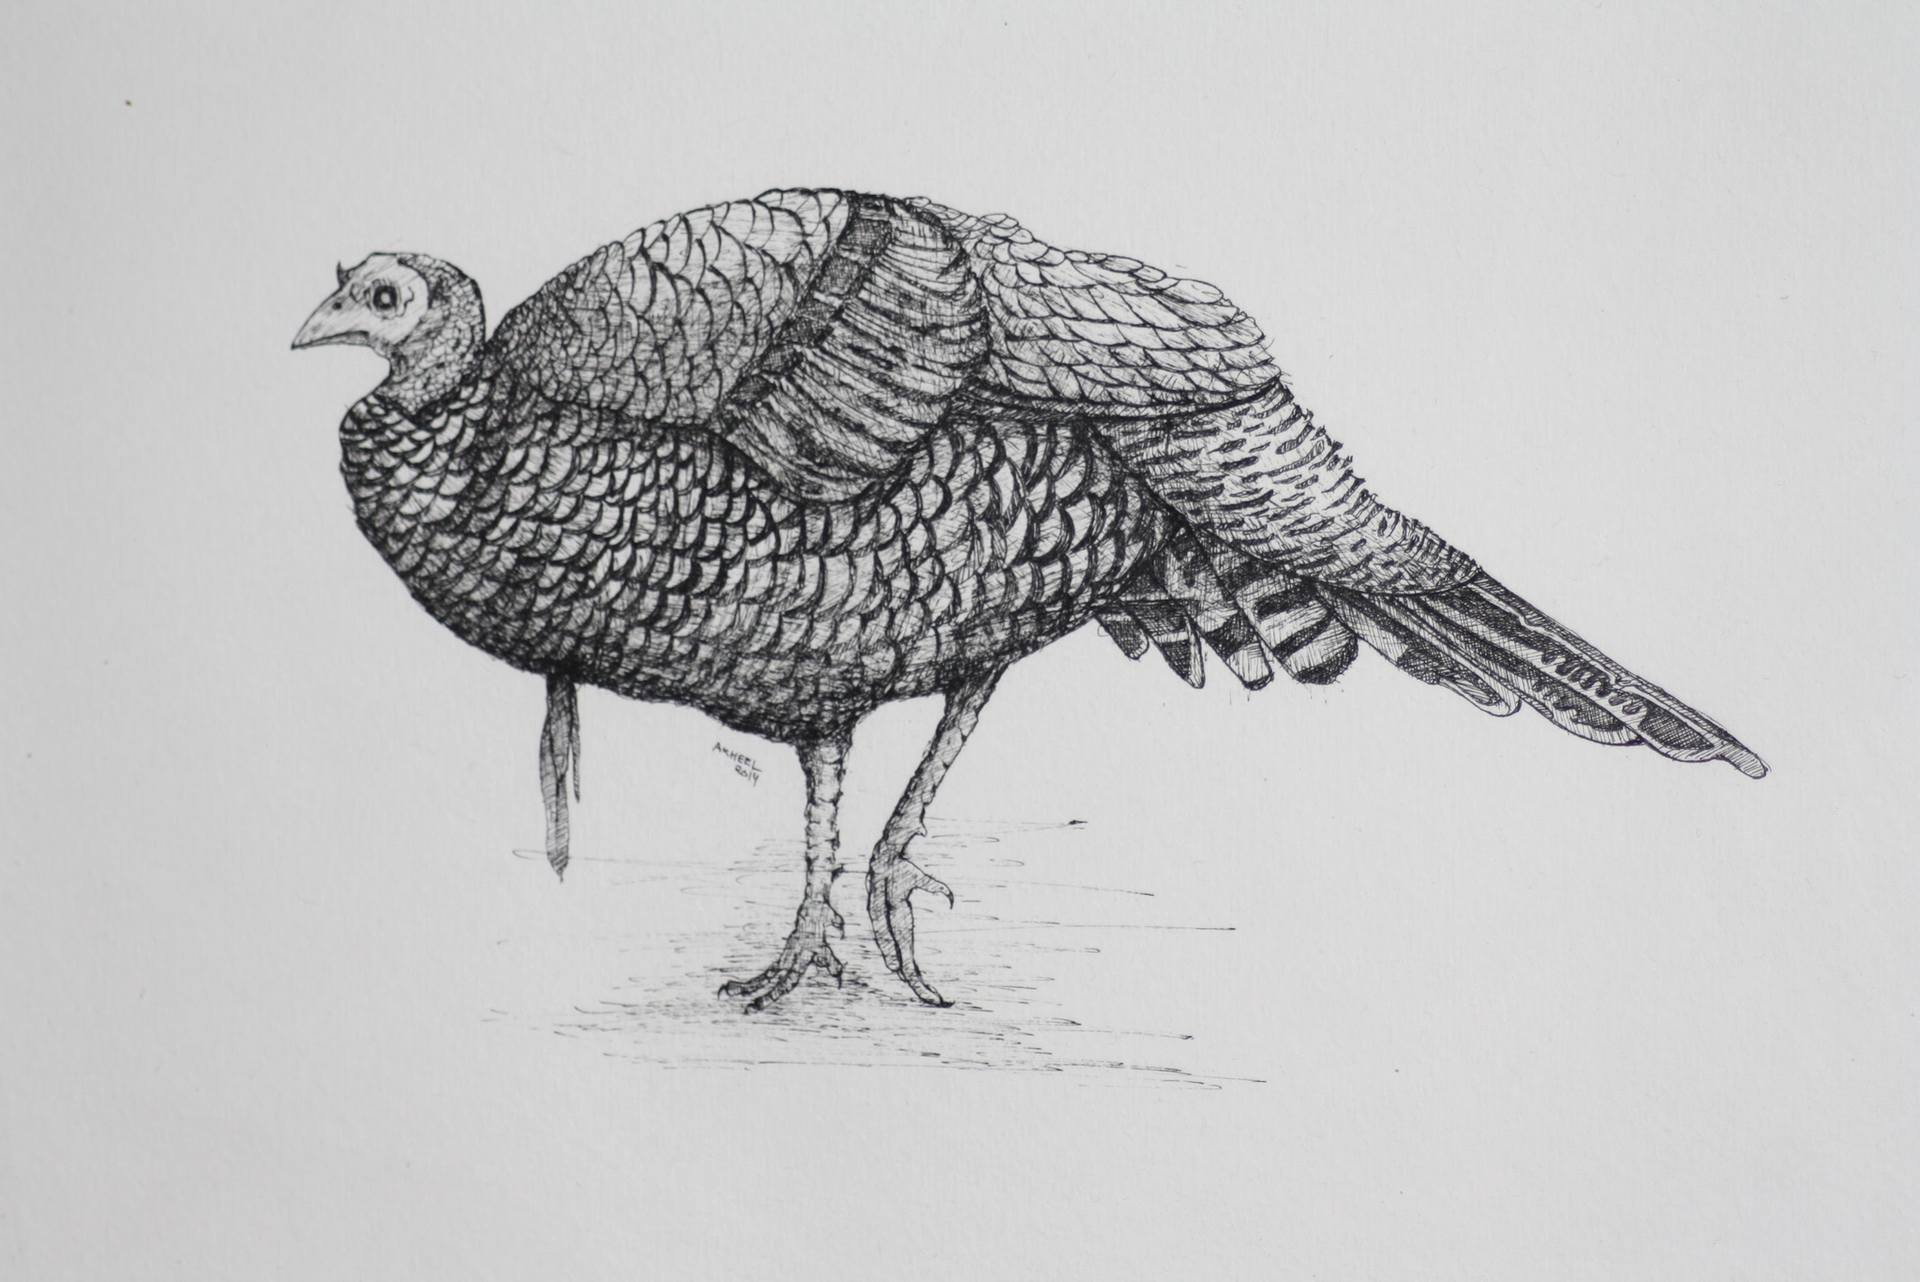 Wild Turkey Sketch at Explore collection of Wild